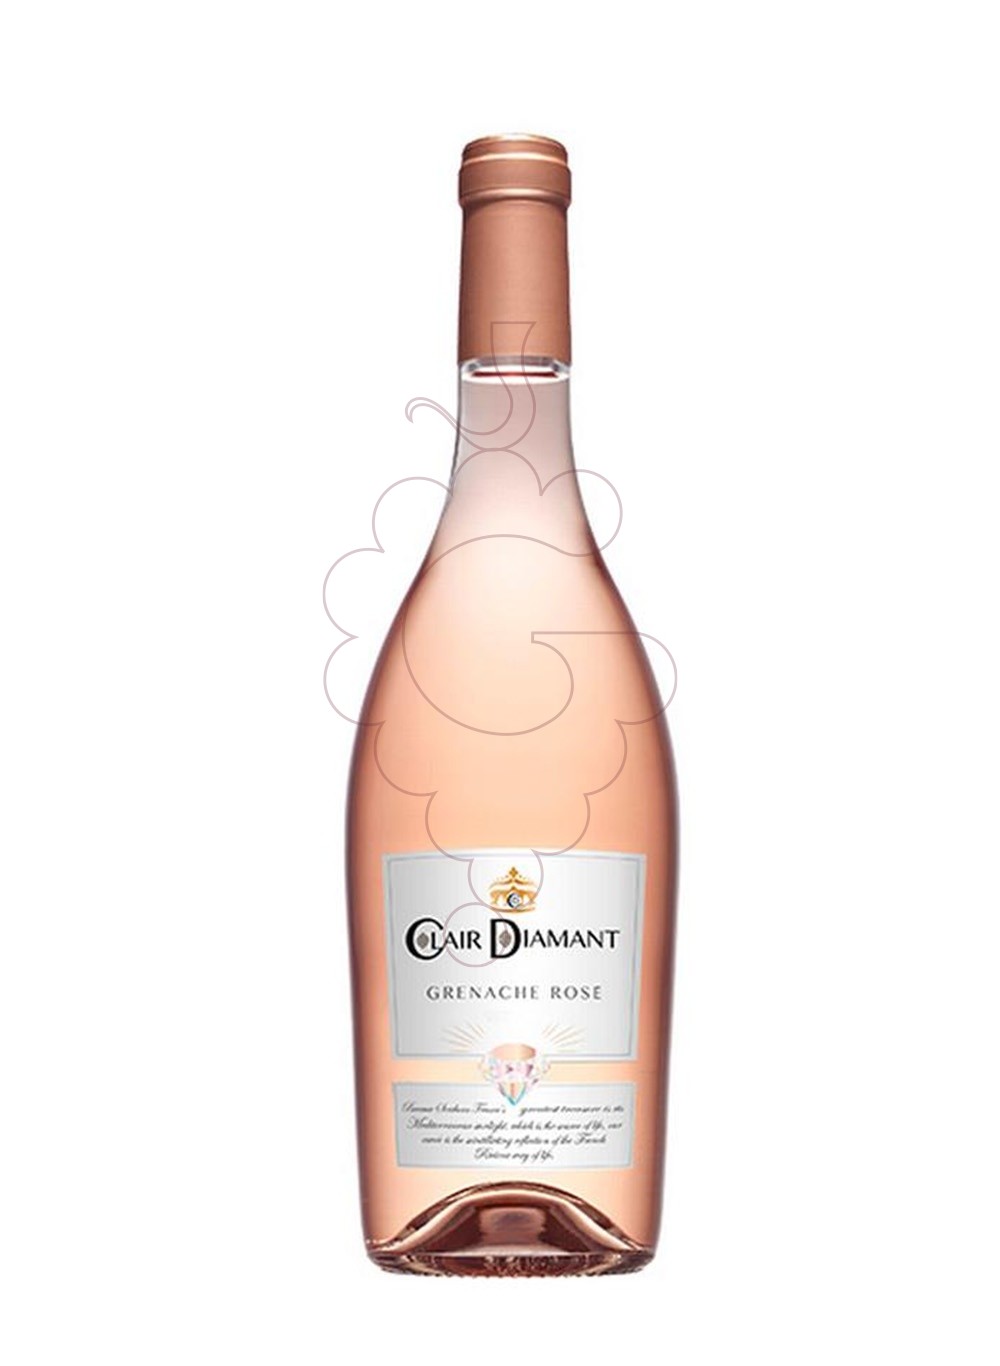 Foto Clair Diamant Grenache Rosé vino rosado